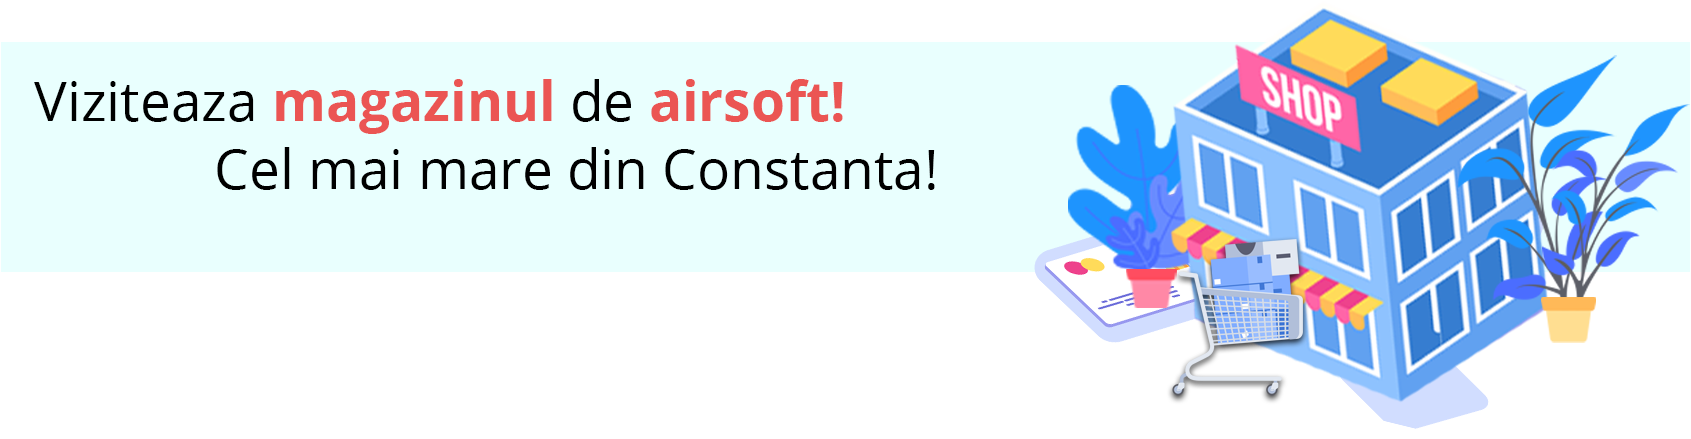 Magazin Airsoft Constanta